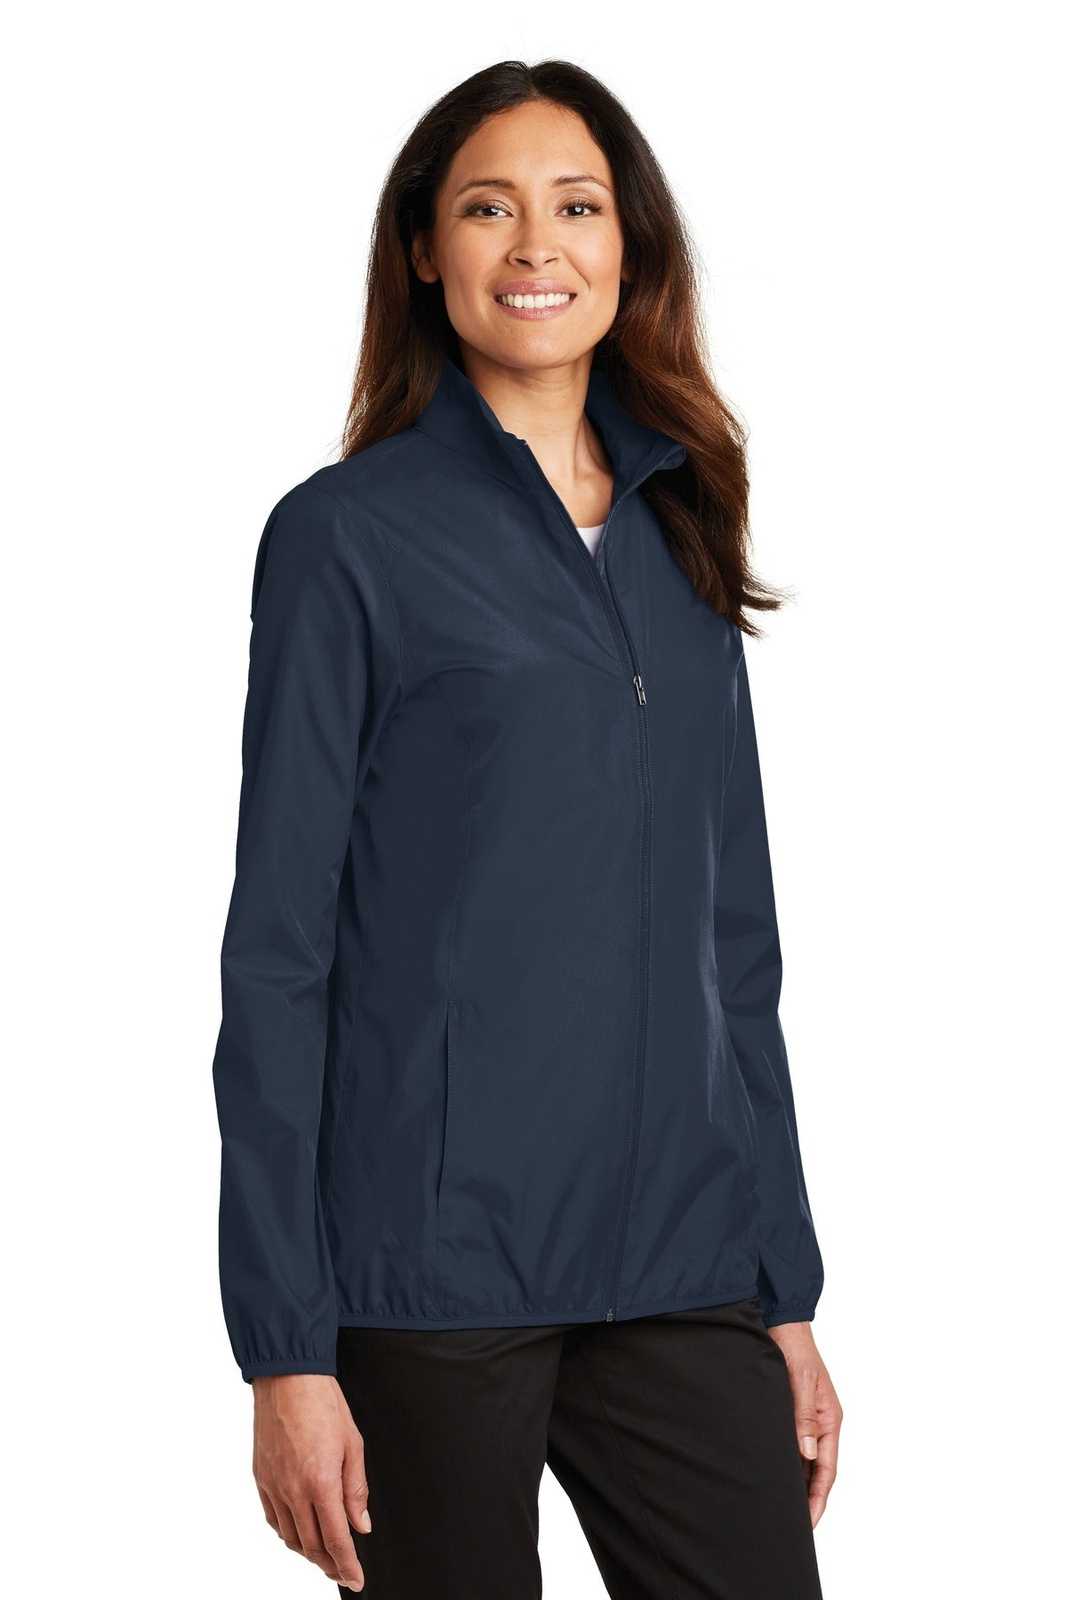 Port Authority L344 Ladies Zephyr Full-Zip Jacket - Dress Blue Navy - HIT a Double - 4